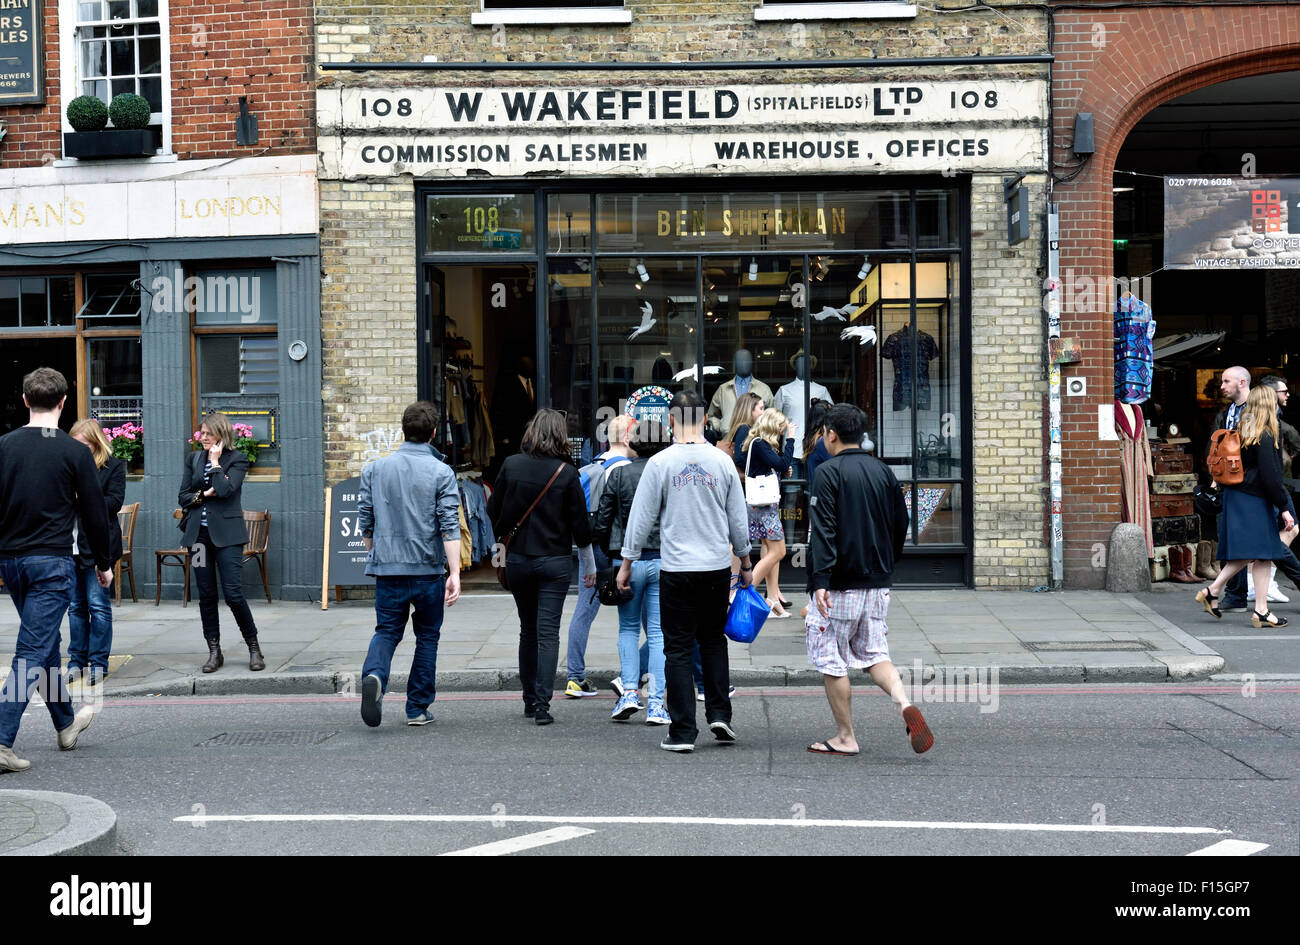 Ben Sherman Herren Mode Shop mit alten Namen malte W. Wakefield oben, Spitalfields London Borough of Tower Hamlets England UK Stockfoto